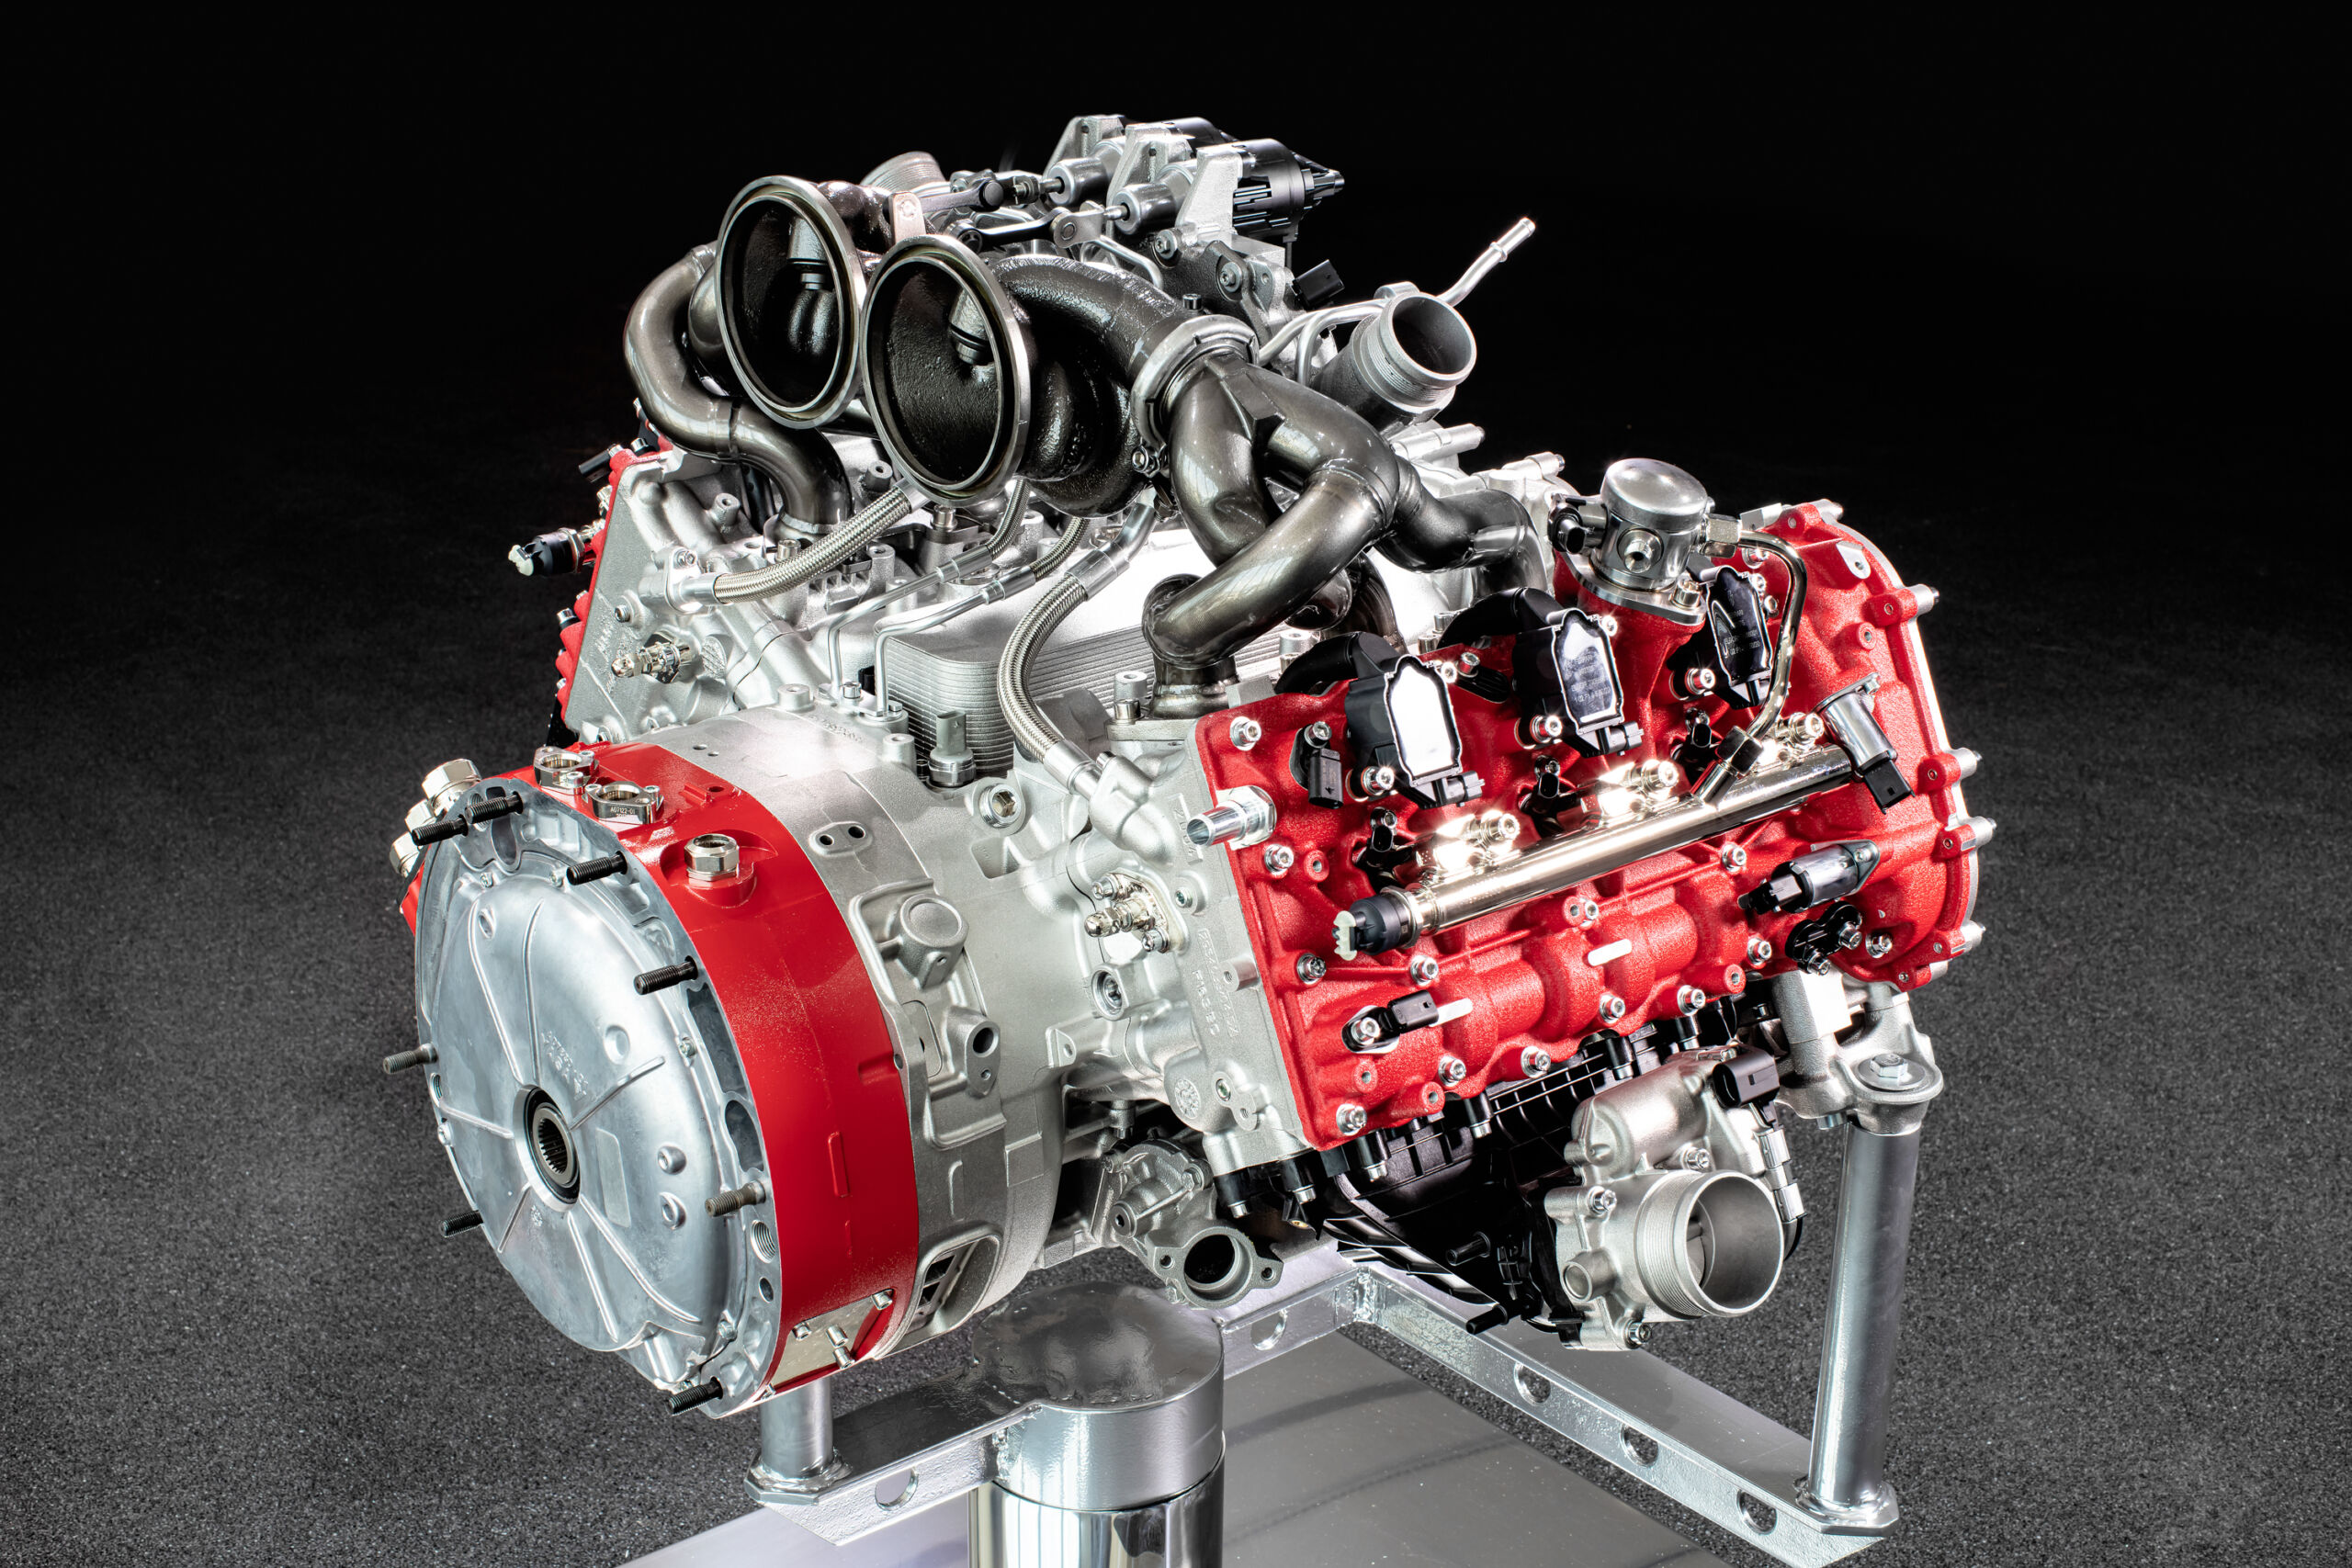 The 2023 Ferrari 296 GTS—we drive Ferrari's plug-in hybrid convertible